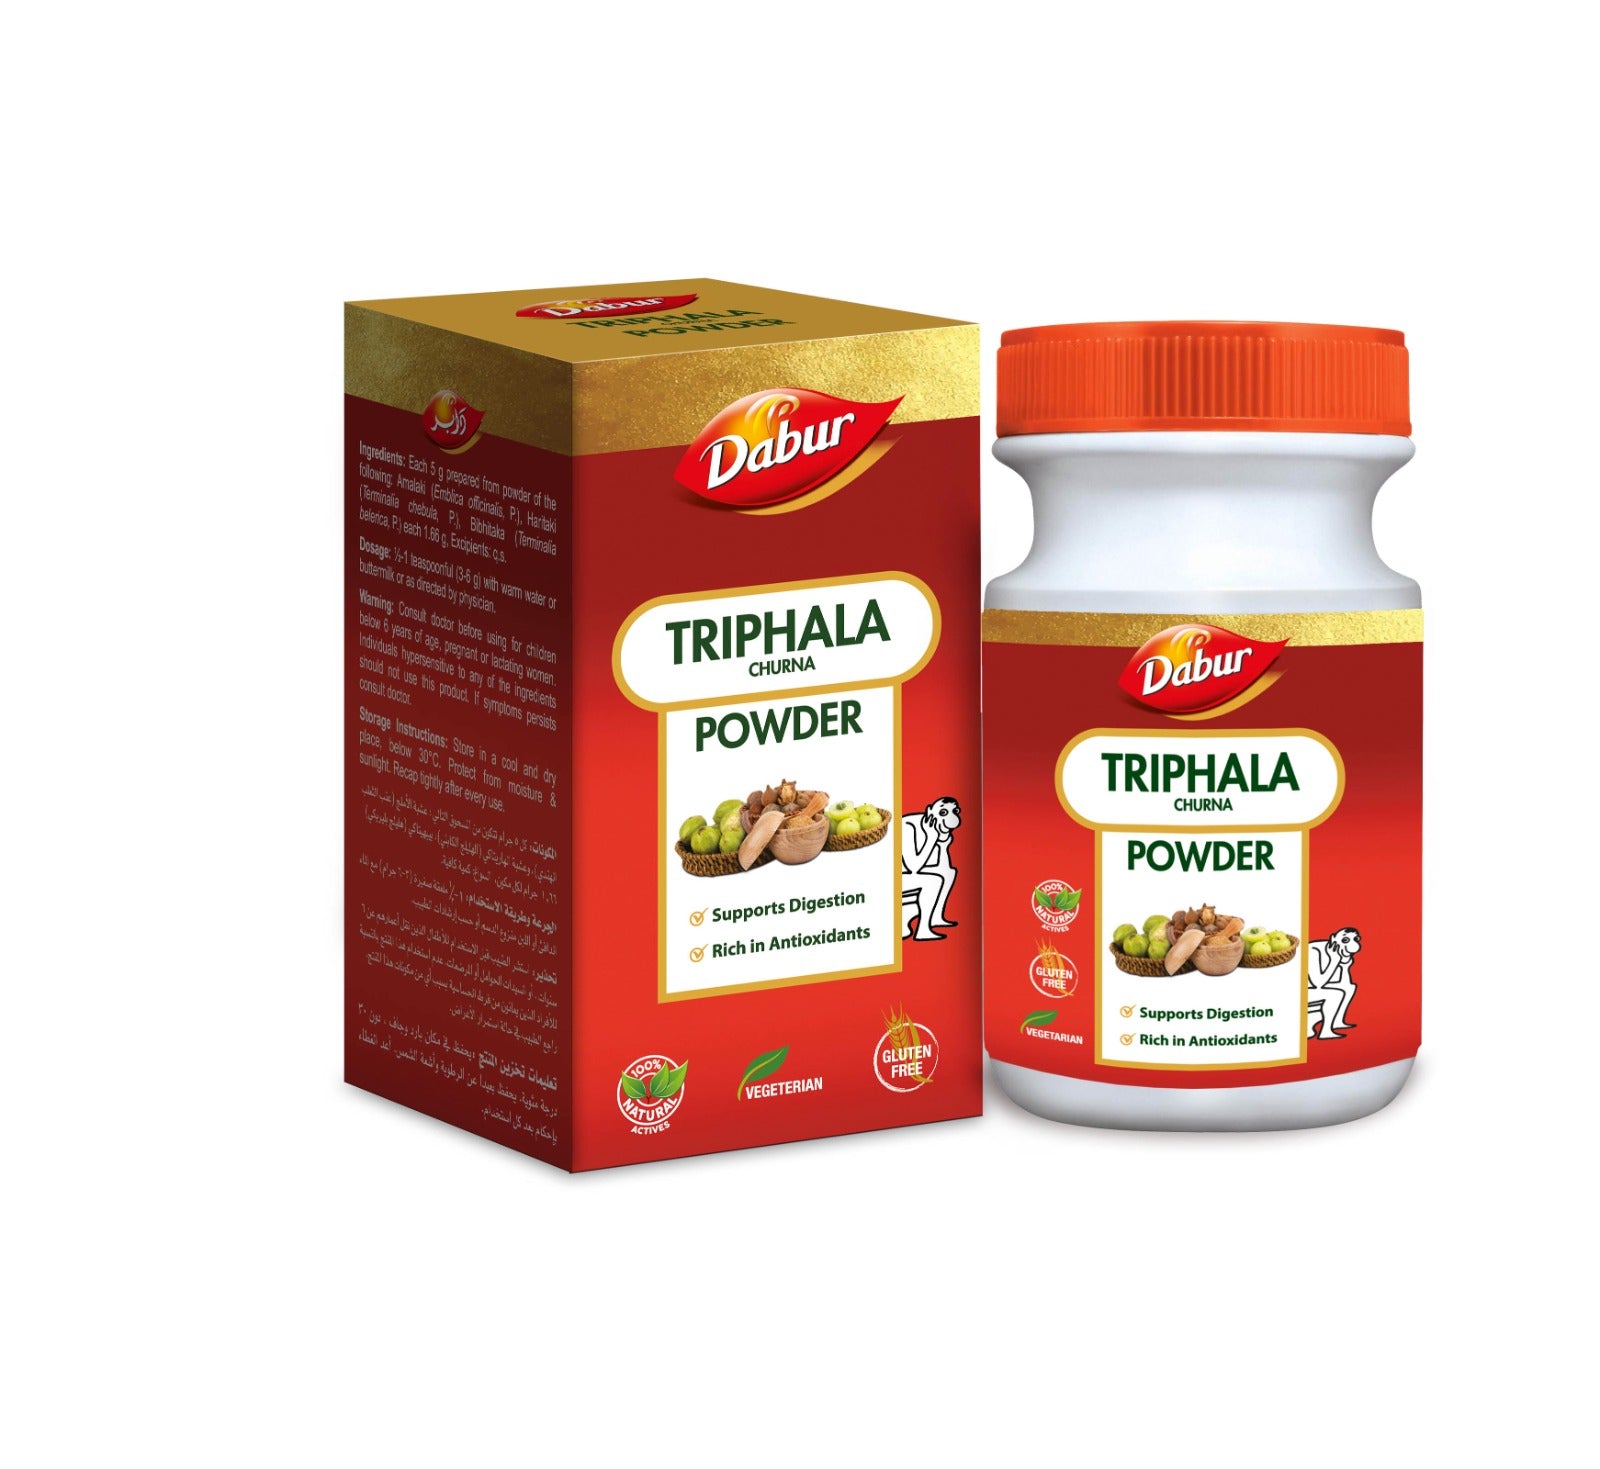 Dabur Natural Triphala Churn Powder Supports Digestion, Antioxidant, Gluten Free